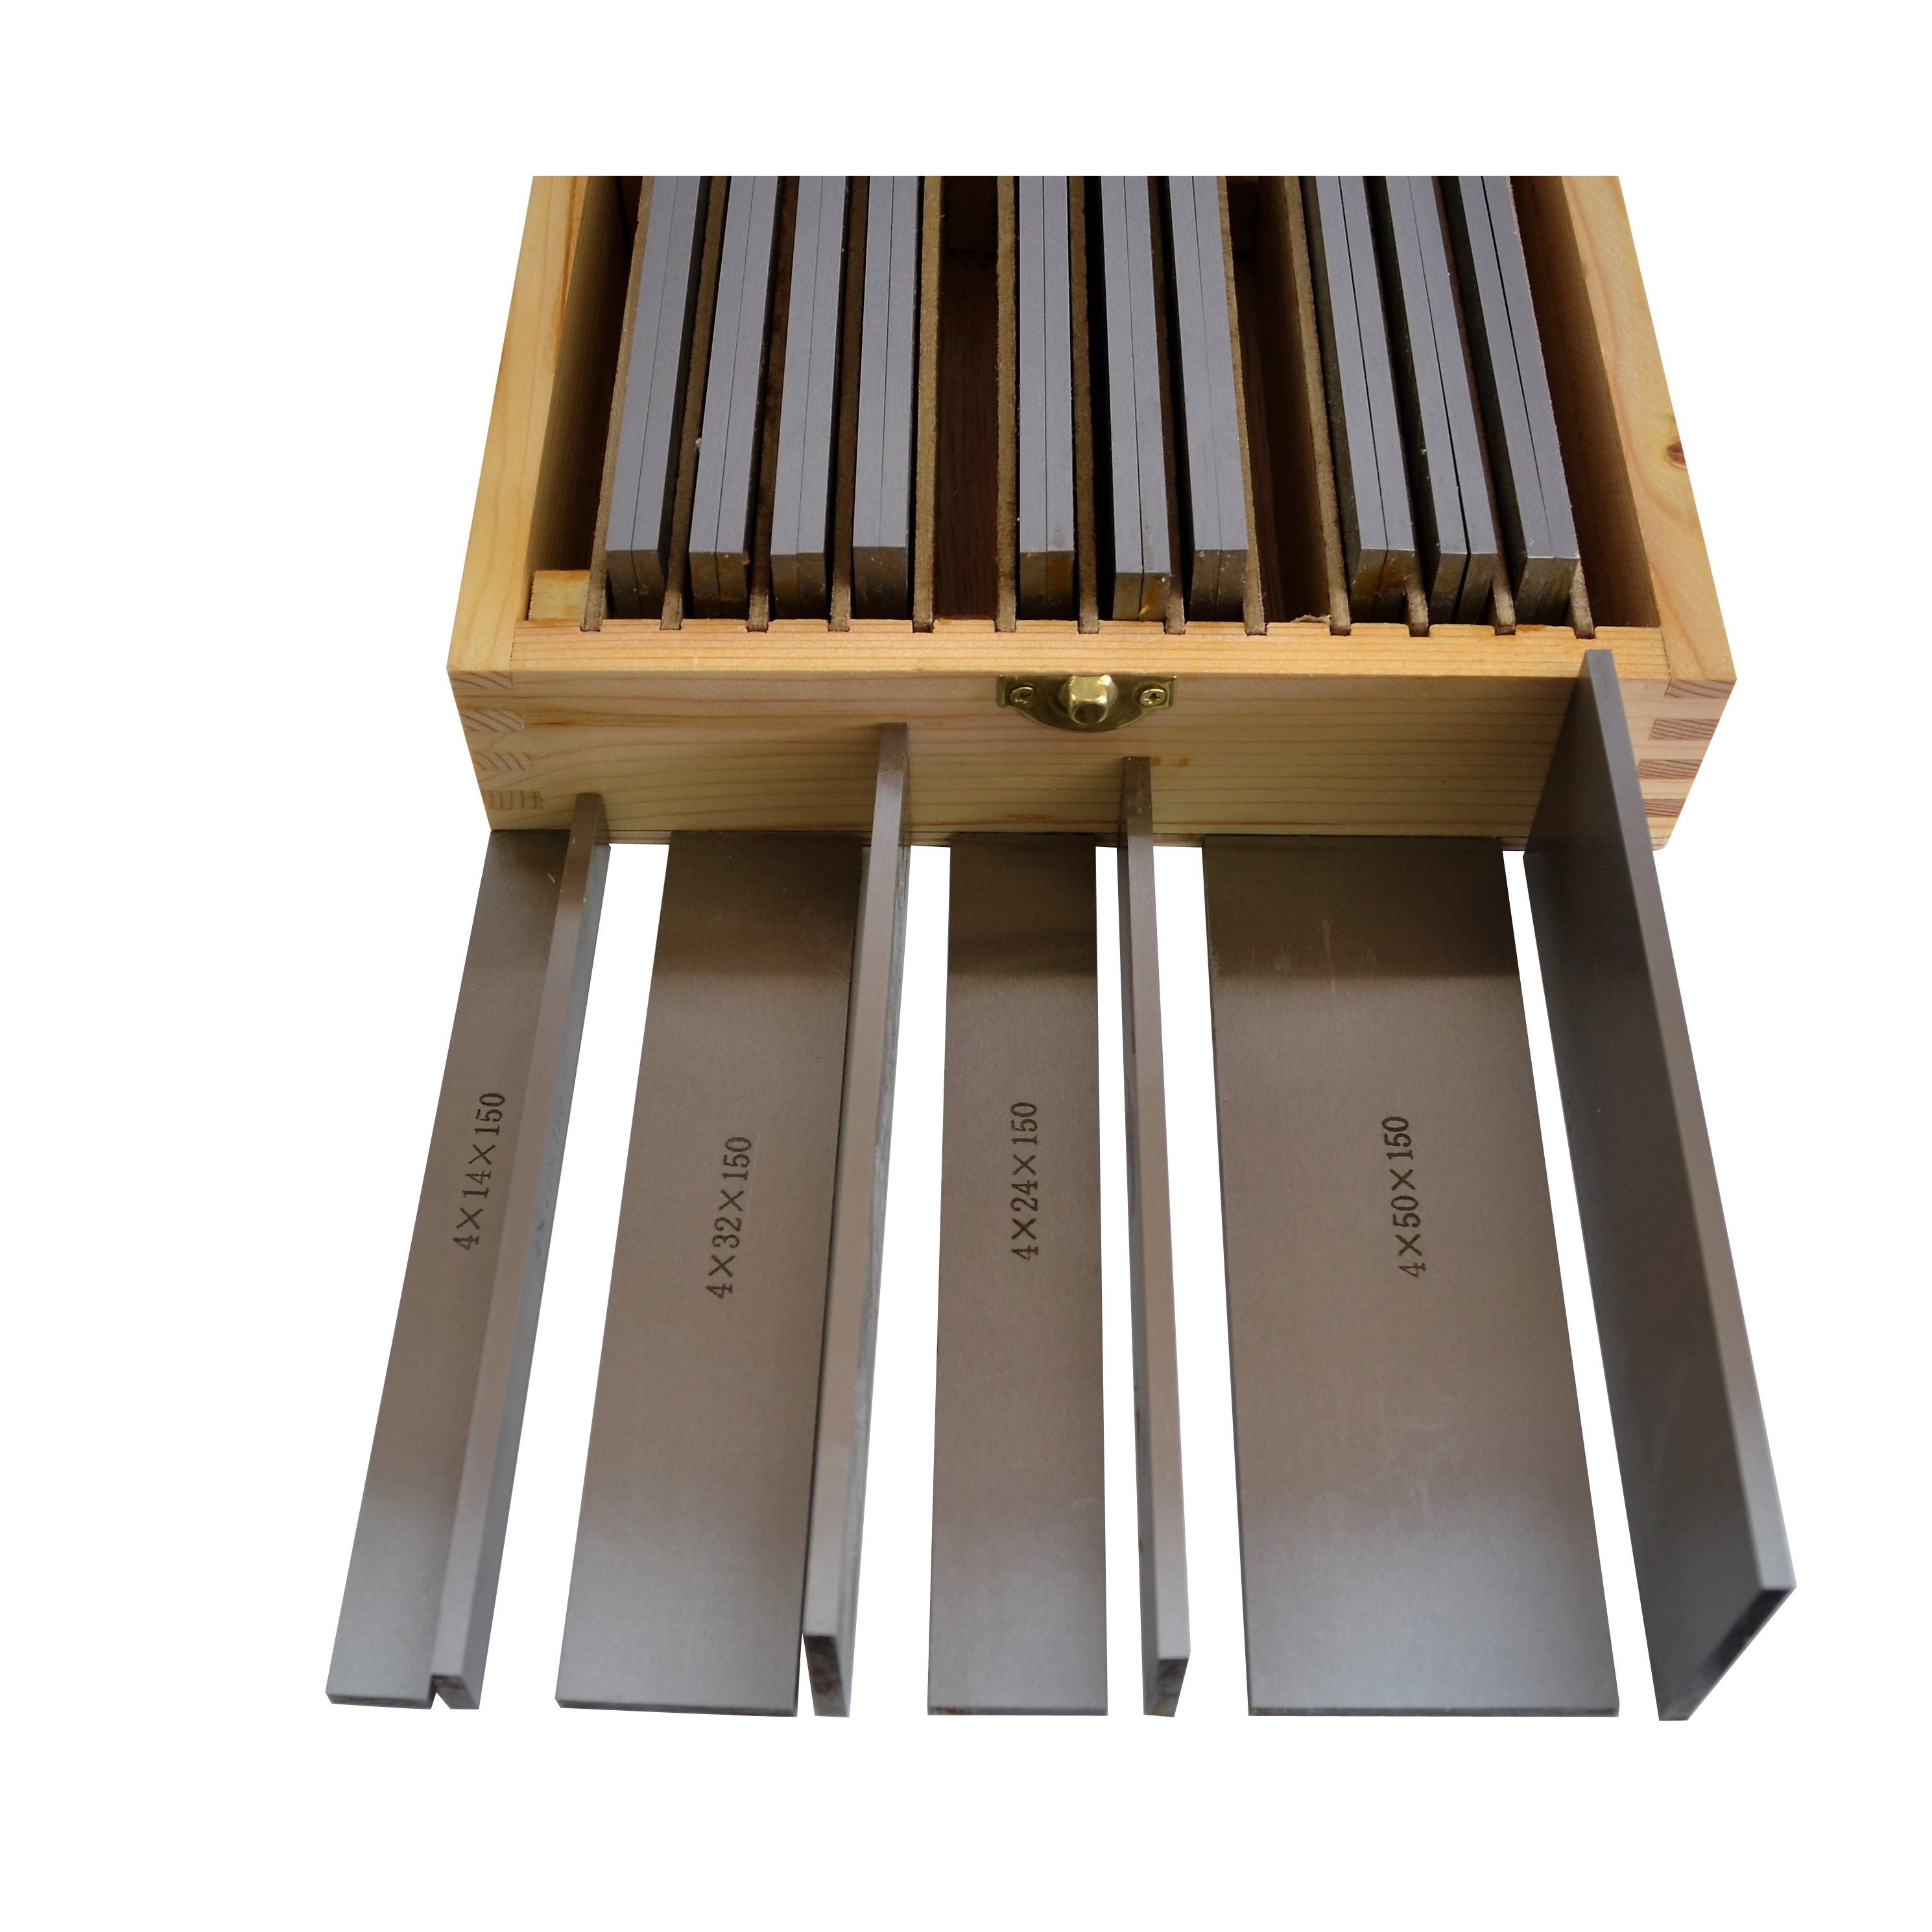 parallel steel gauge block ground steel bars precision cnc milling 4mm thick industrial measurement 